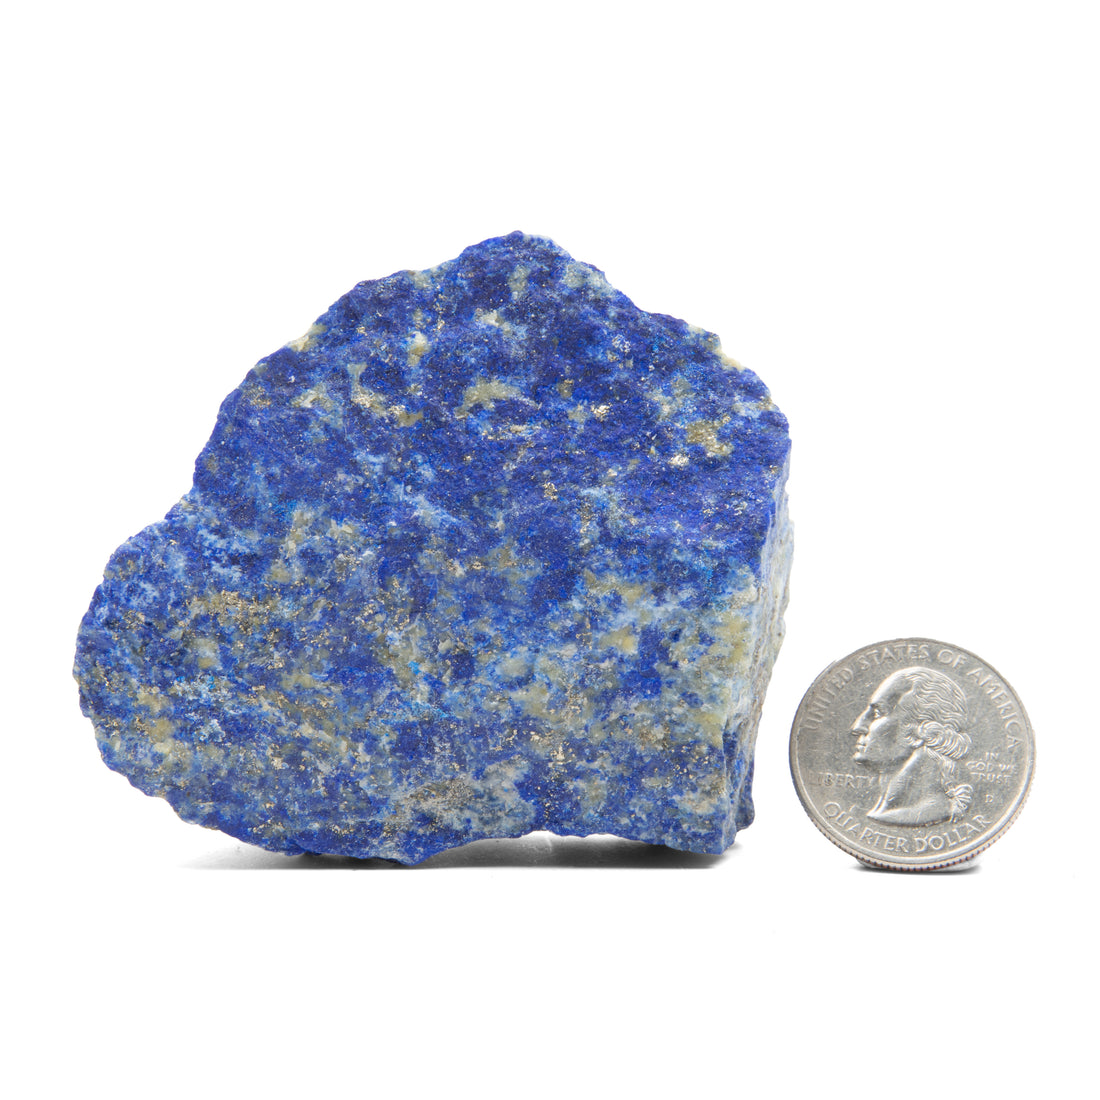 Lapis Lazuli - Rough